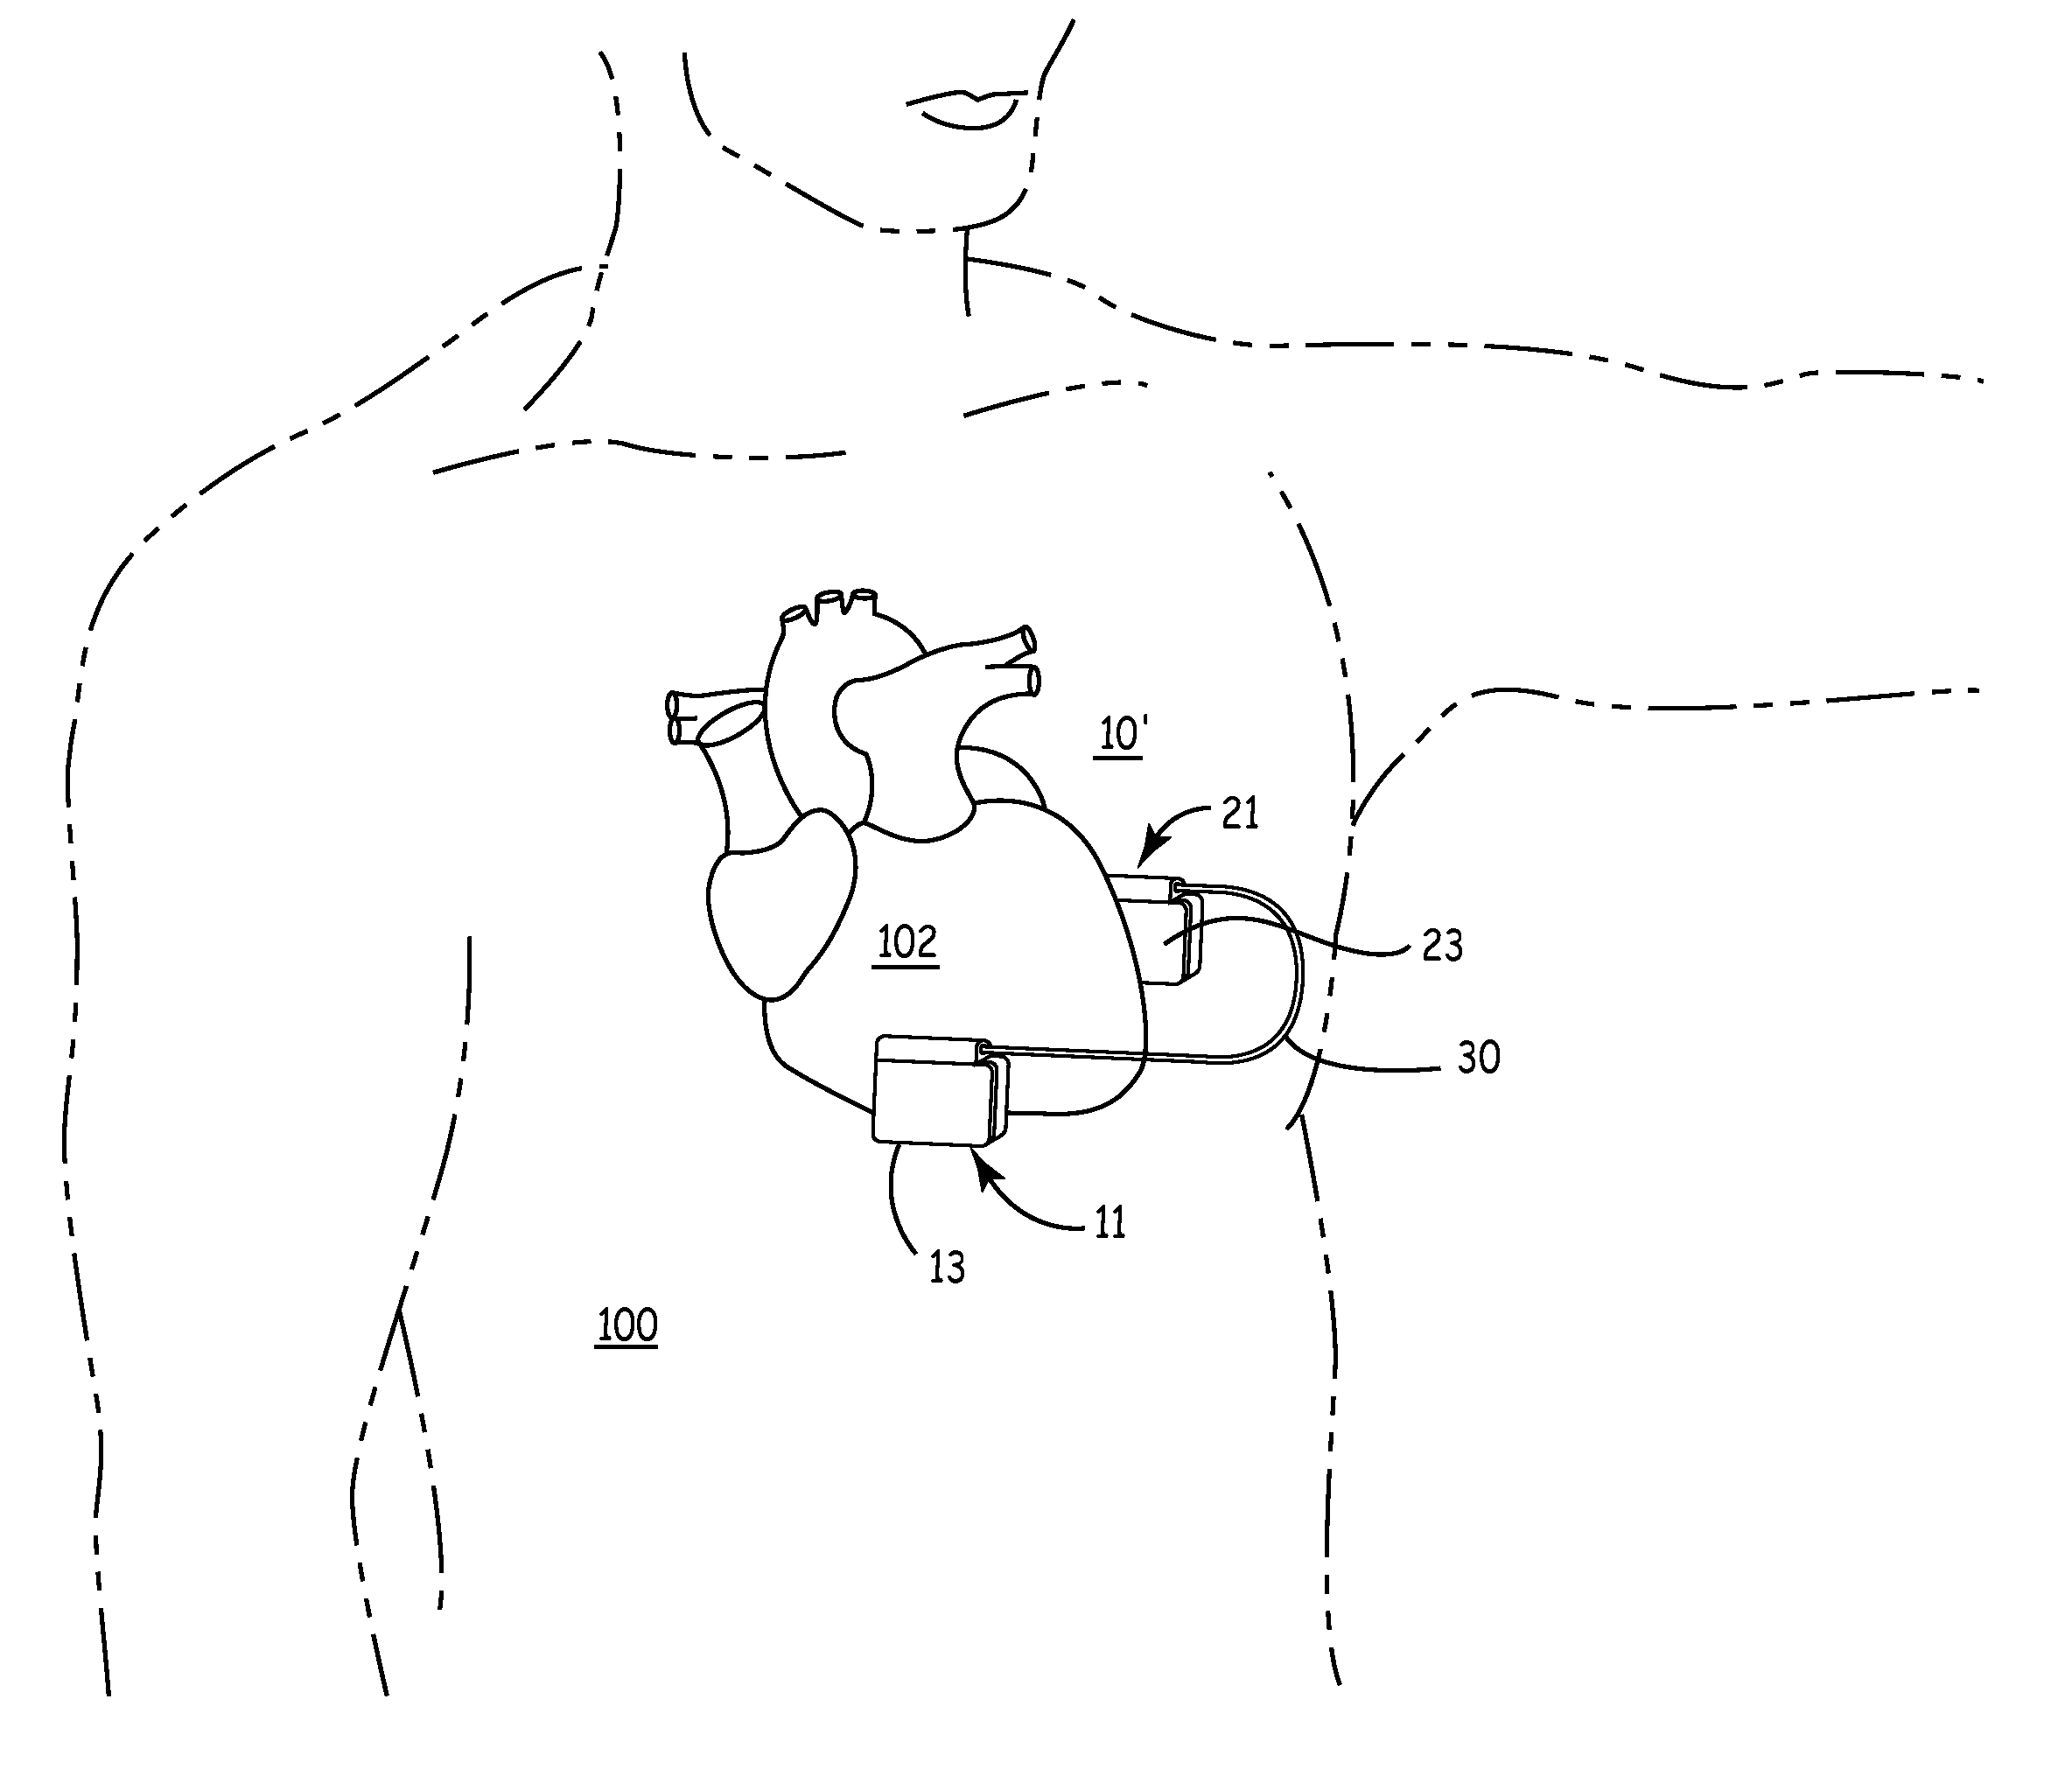 Subcutaneous implantable cardioverter/defibrillator